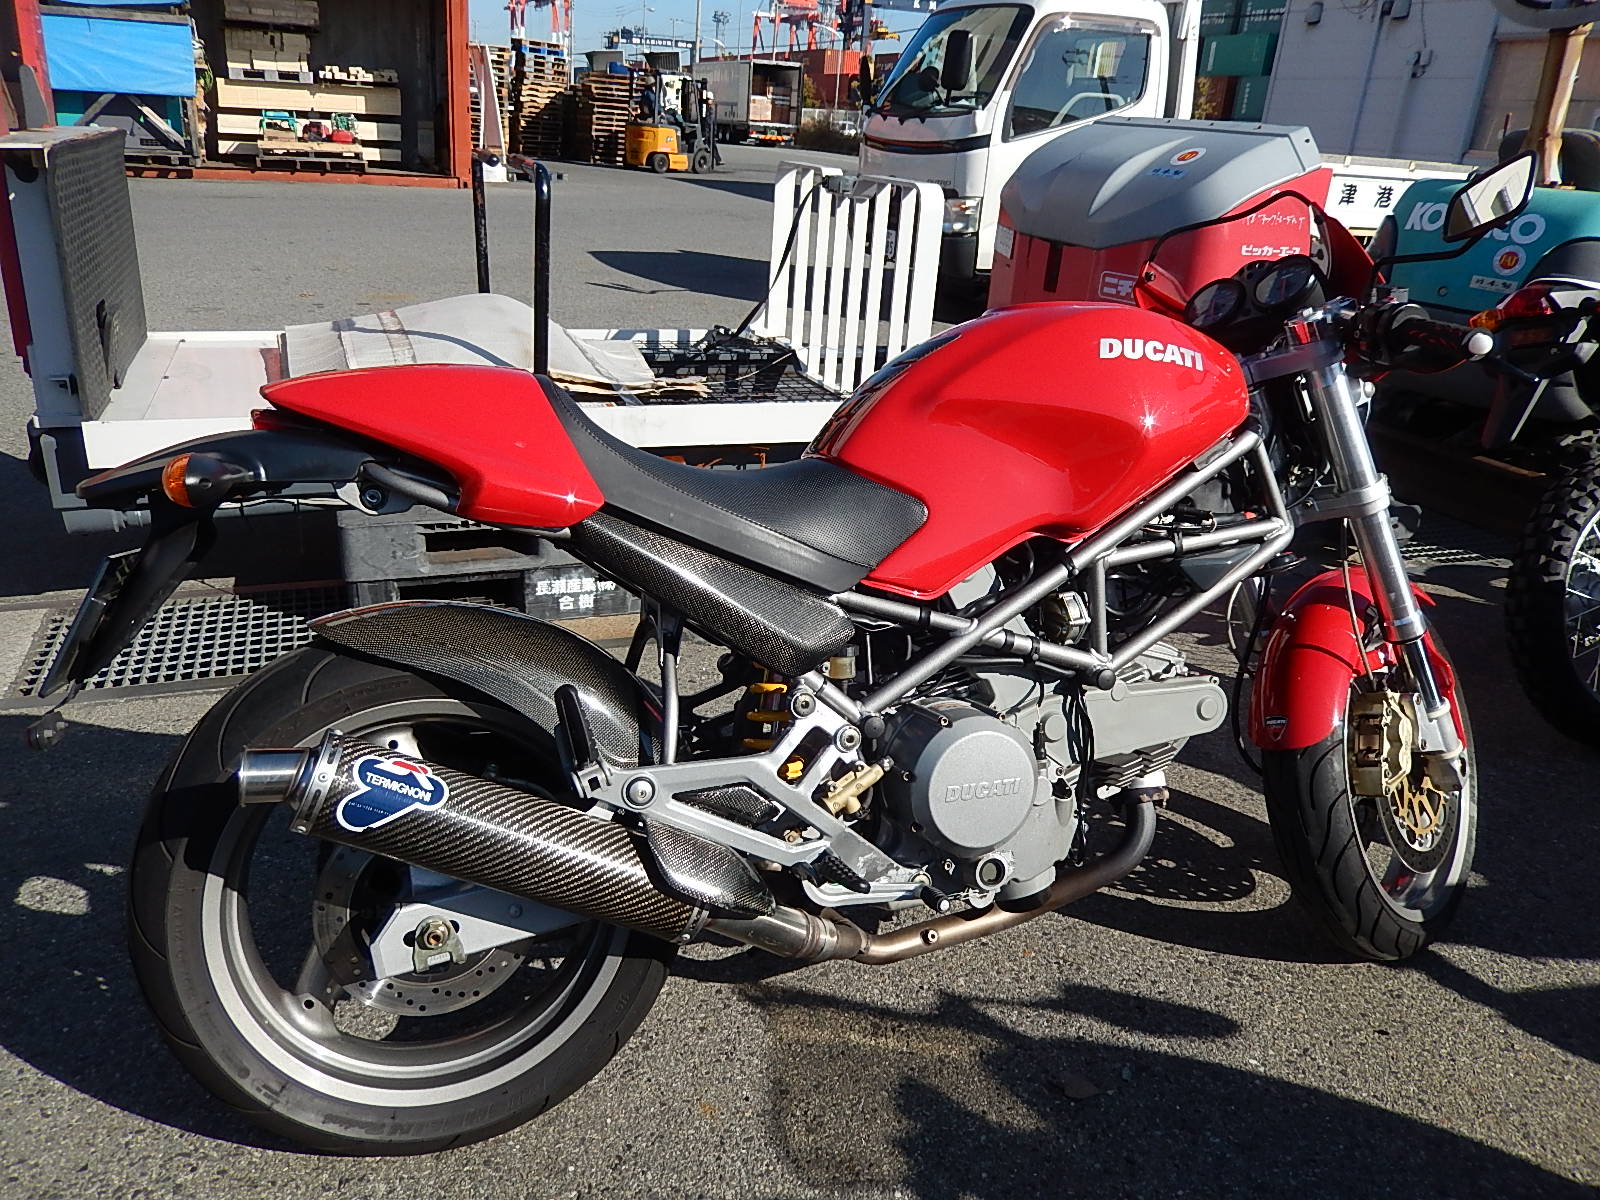 Ducati Monster 400 2001. Дукати м 400 1994 года. Ducati турист 2000000. Дукати продают. Купить мотоцикл в амурской